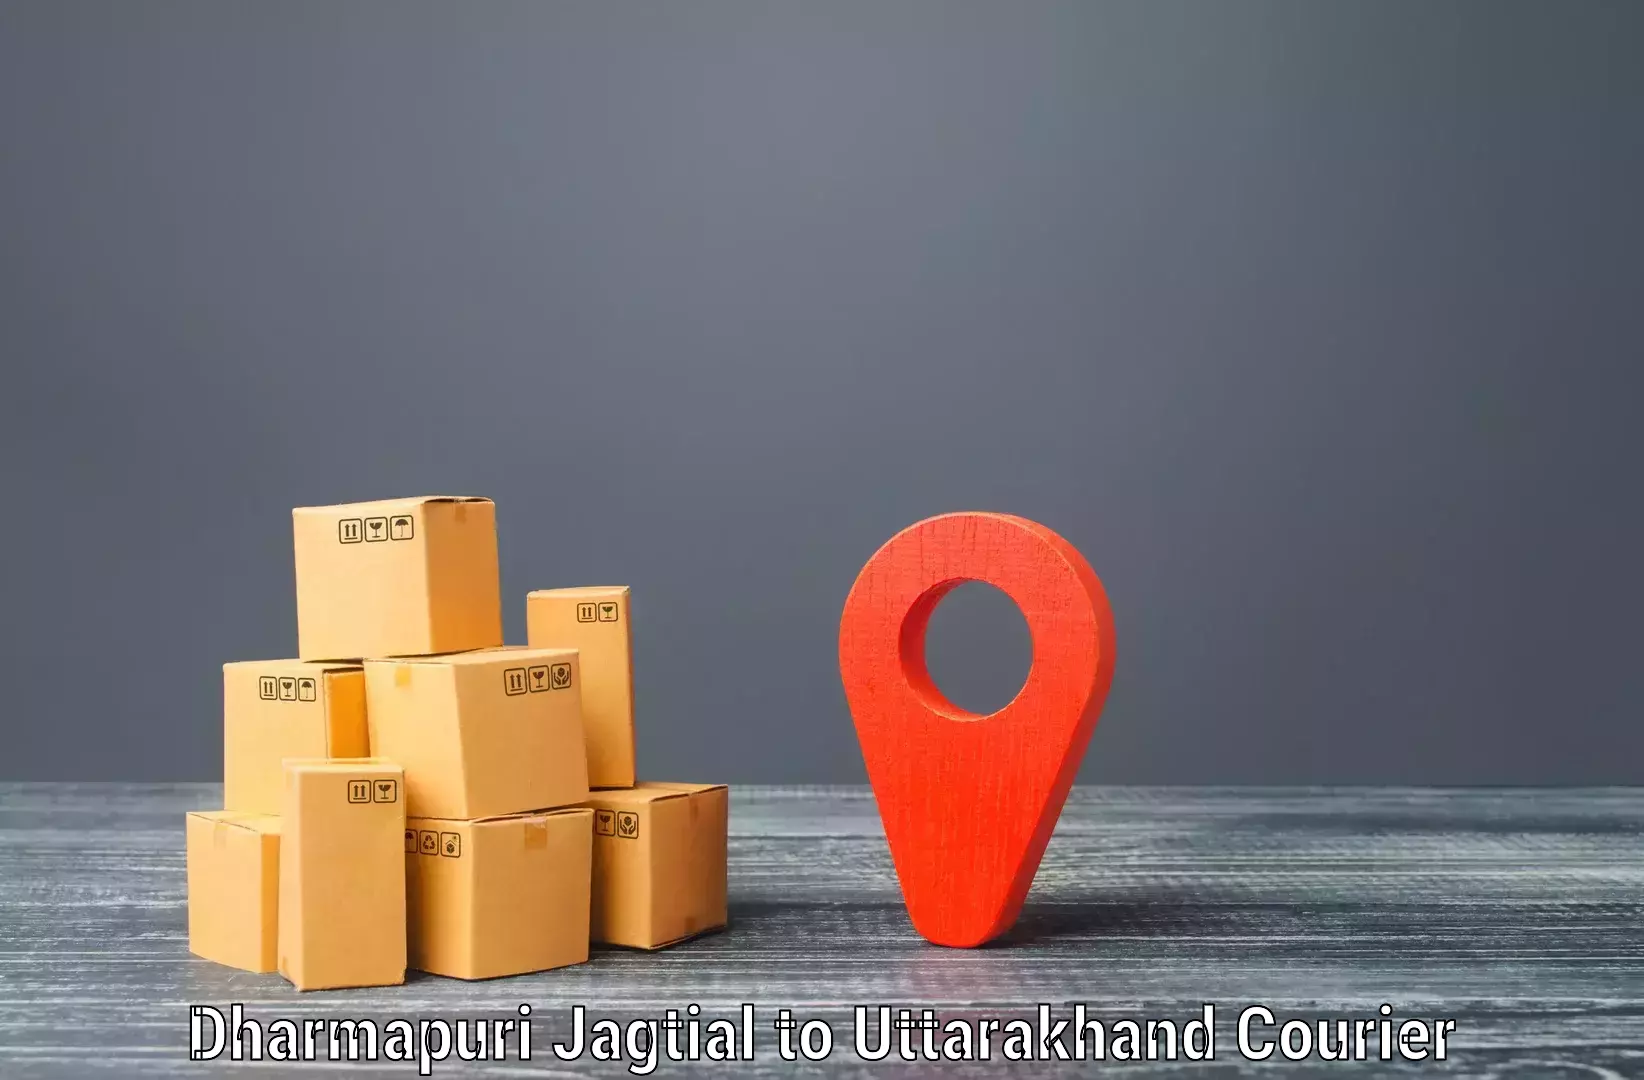 Efficient parcel tracking Dharmapuri Jagtial to Rishikesh